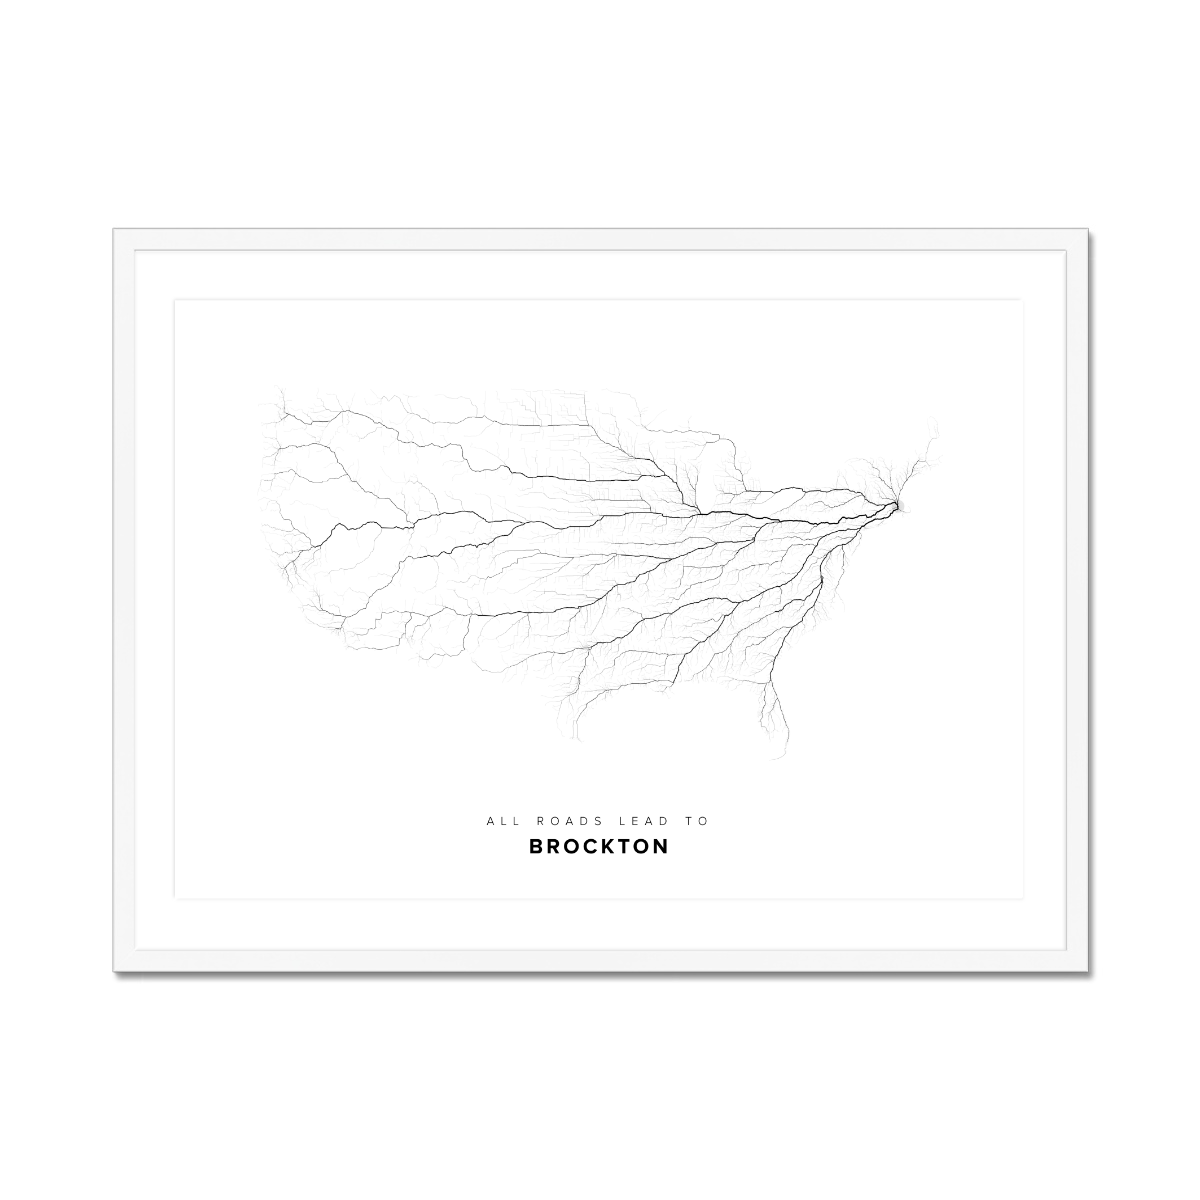 All roads lead to Brockton (United States of America) Fine Art Map Print